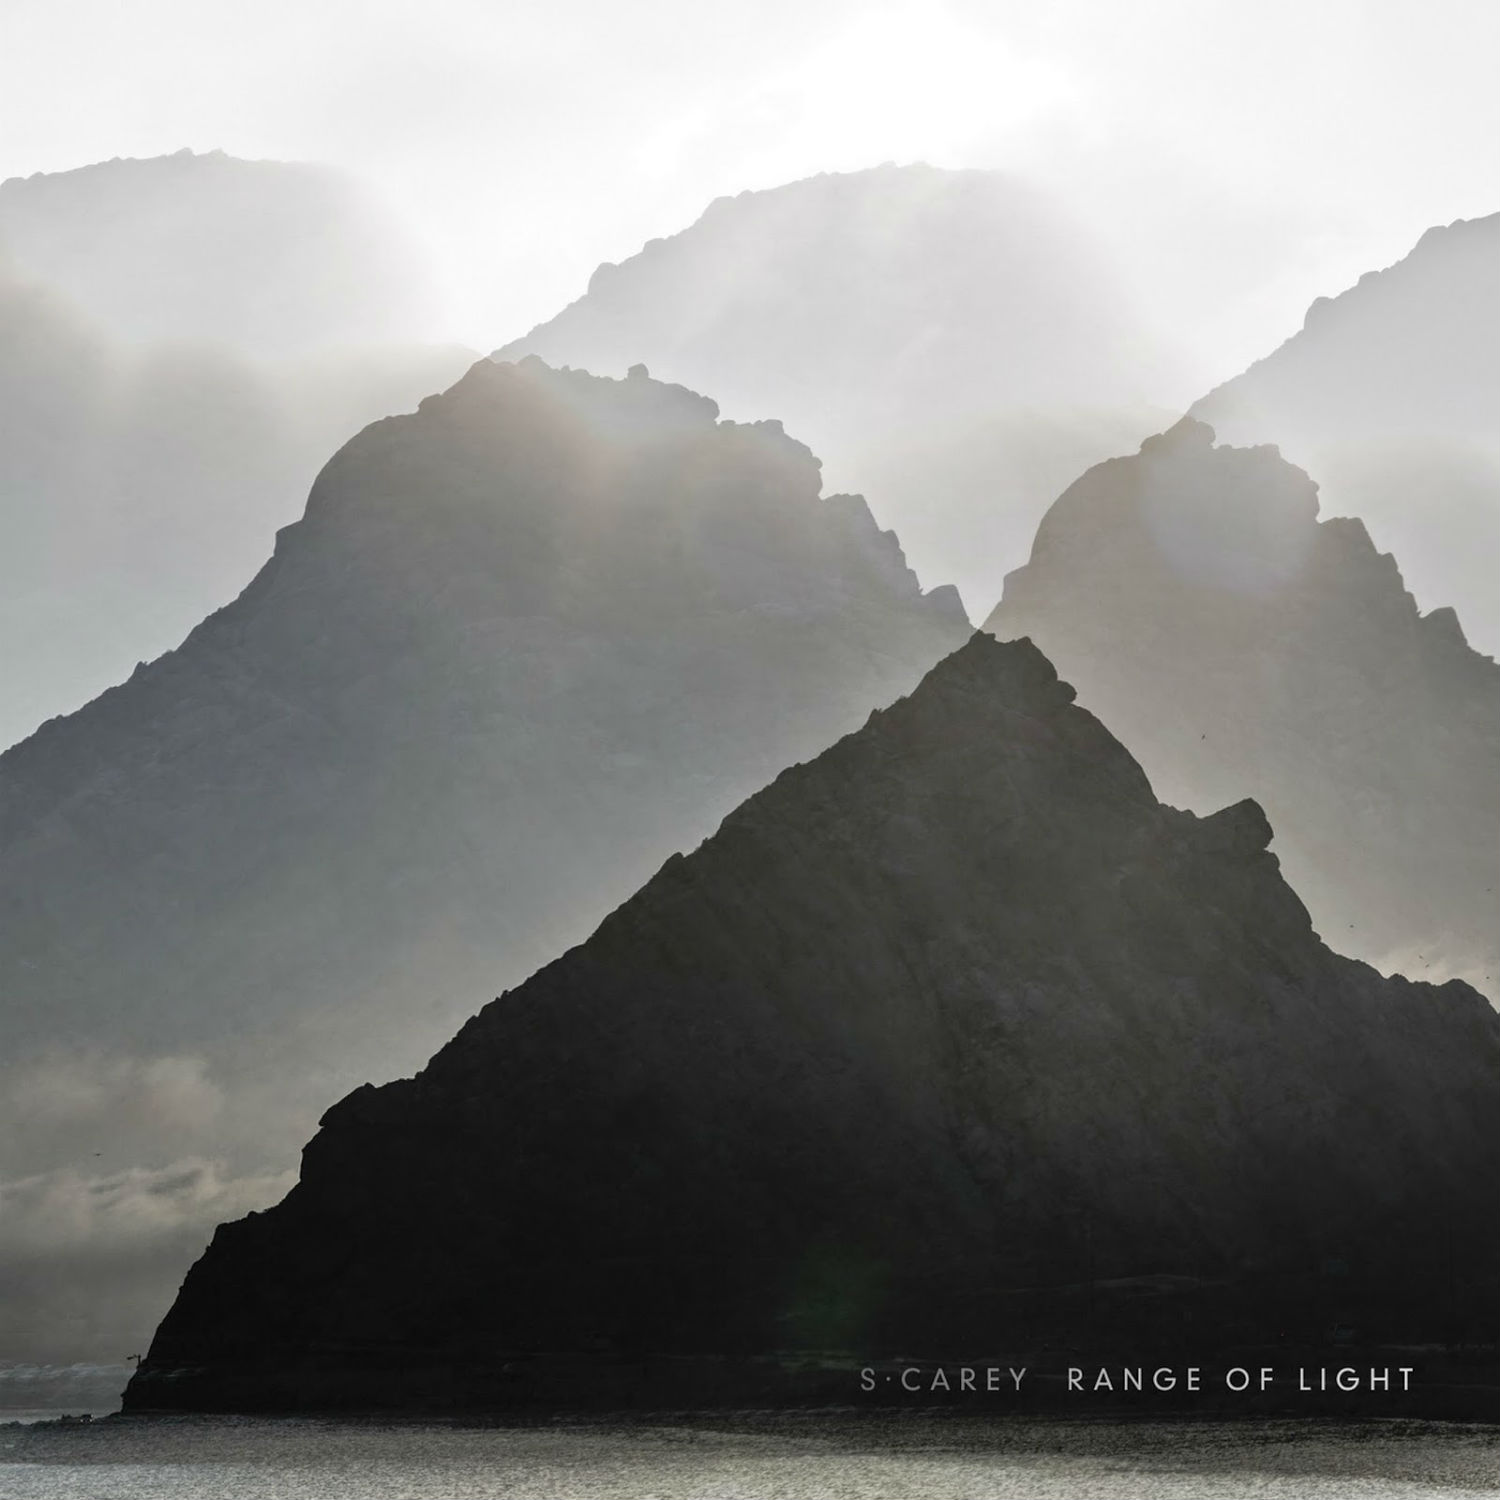 s.carey range of light album cover mountains black white 